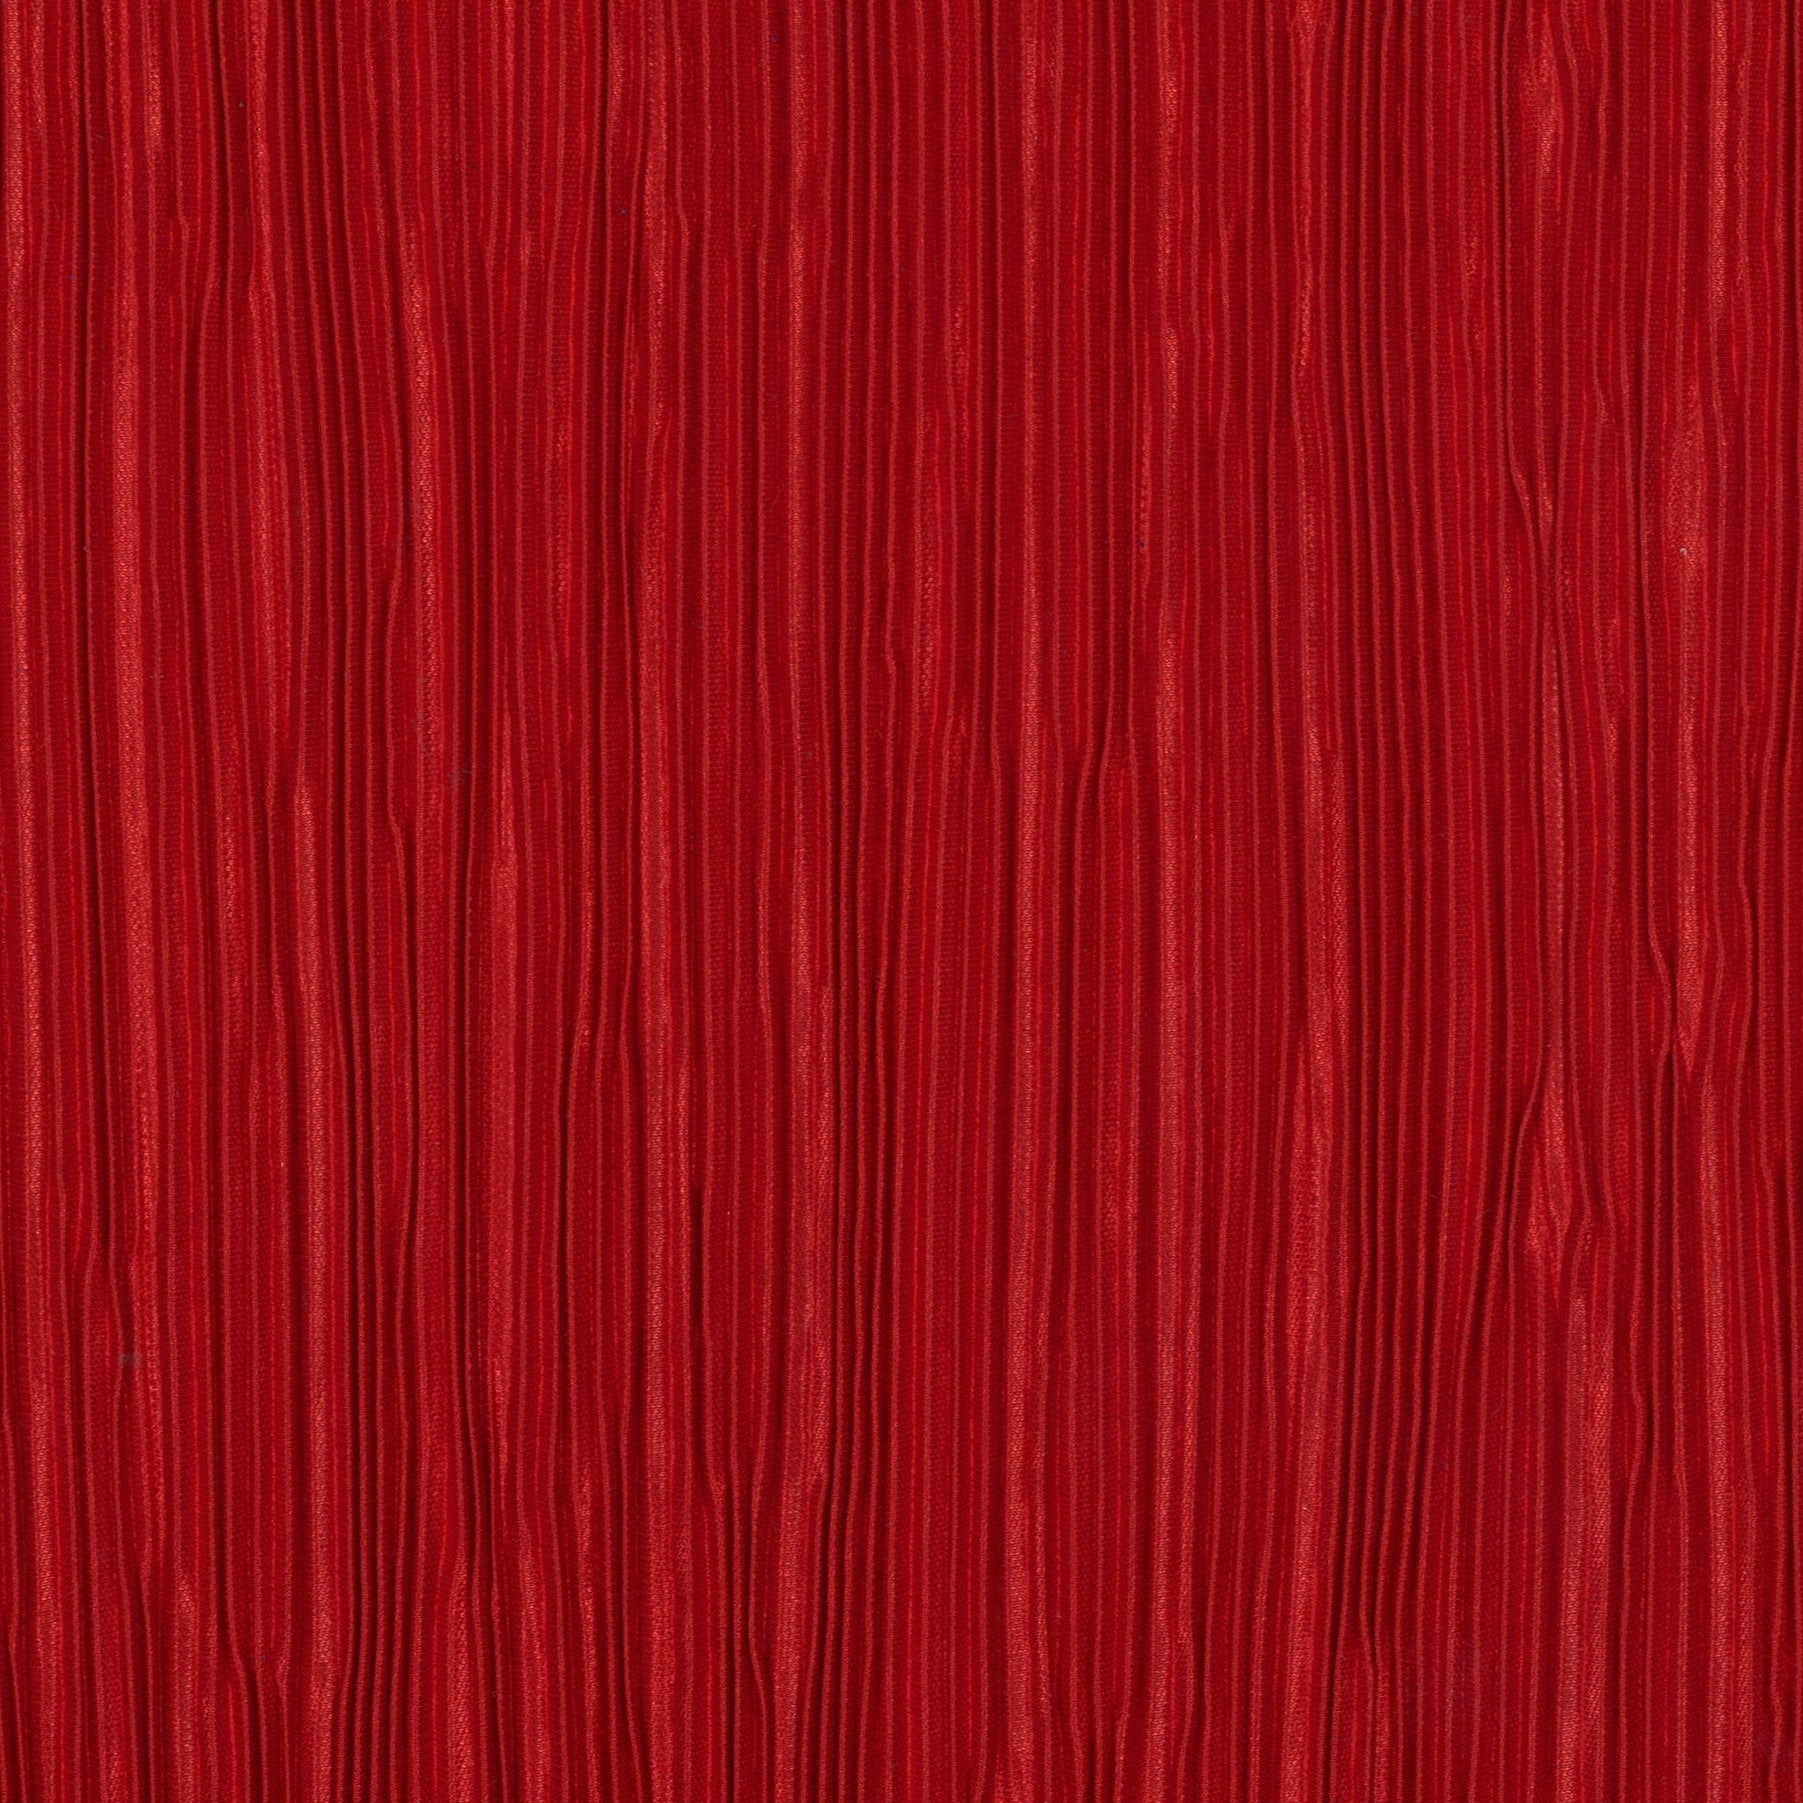 9761-05 Red Polyester Pleat Plain Dyed 100% 180g/yd 56&quot; knit plain dyed pleat polyester red Solid Color, Pleat - knit fabric - woven fabric - fabric company - fabric wholesale - fabric b2b - fabric factory - high quality fabric - hong kong fabric - fabric hk - acetate fabric - cotton fabric - linen fabric - metallic fabric - nylon fabric - polyester fabric - spandex fabric - chun wing hing - cwh hk - fabric worldwide ship - 針織布 - 梳織布 - 布料公司- 布料批發 - 香港布料 - 秦榮興